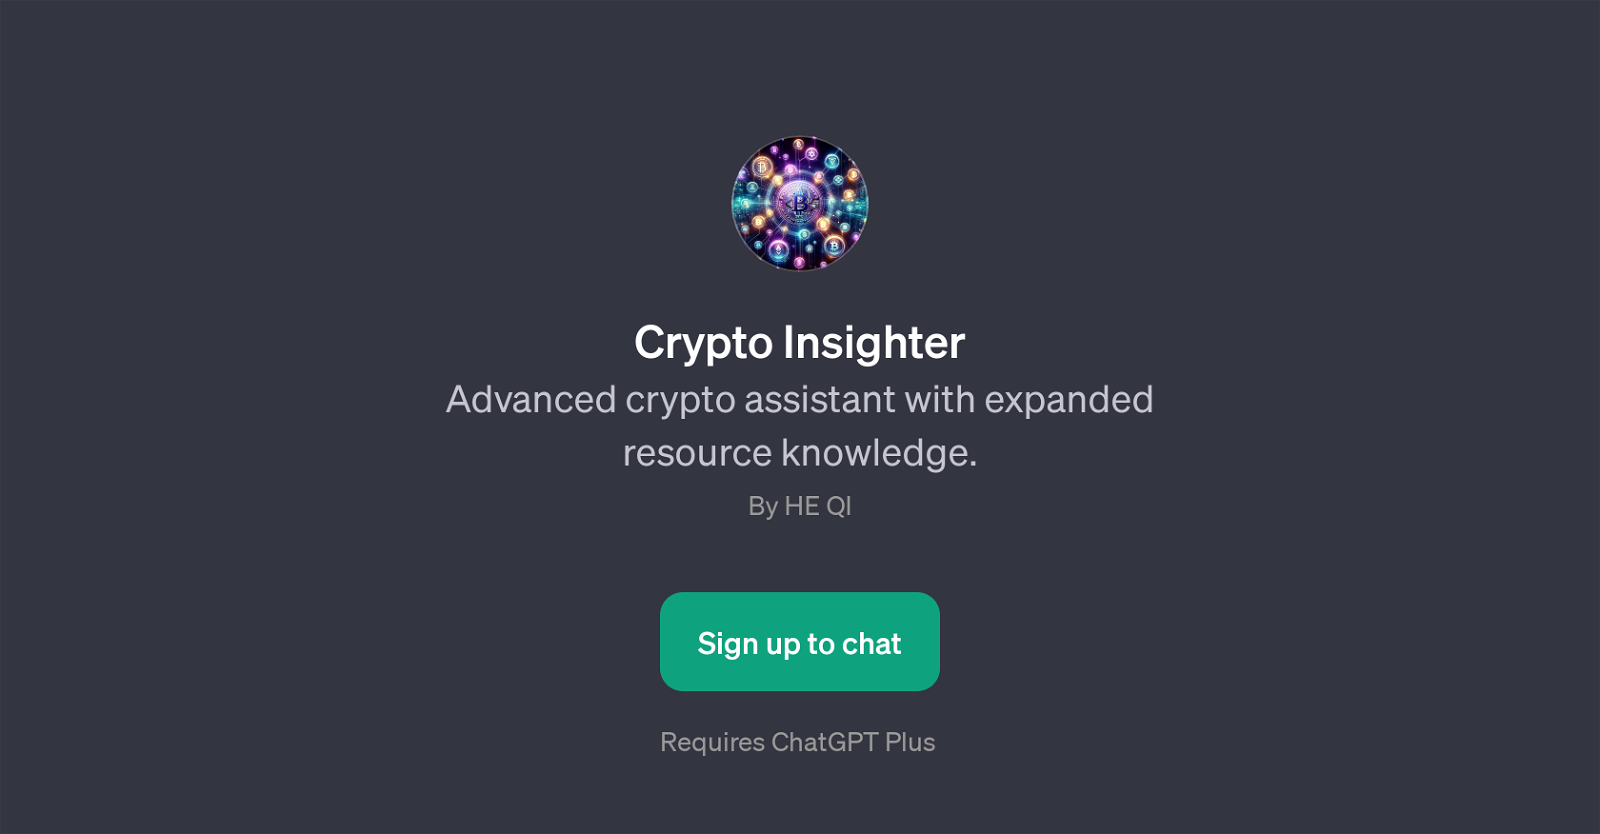 Crypto Insighter website